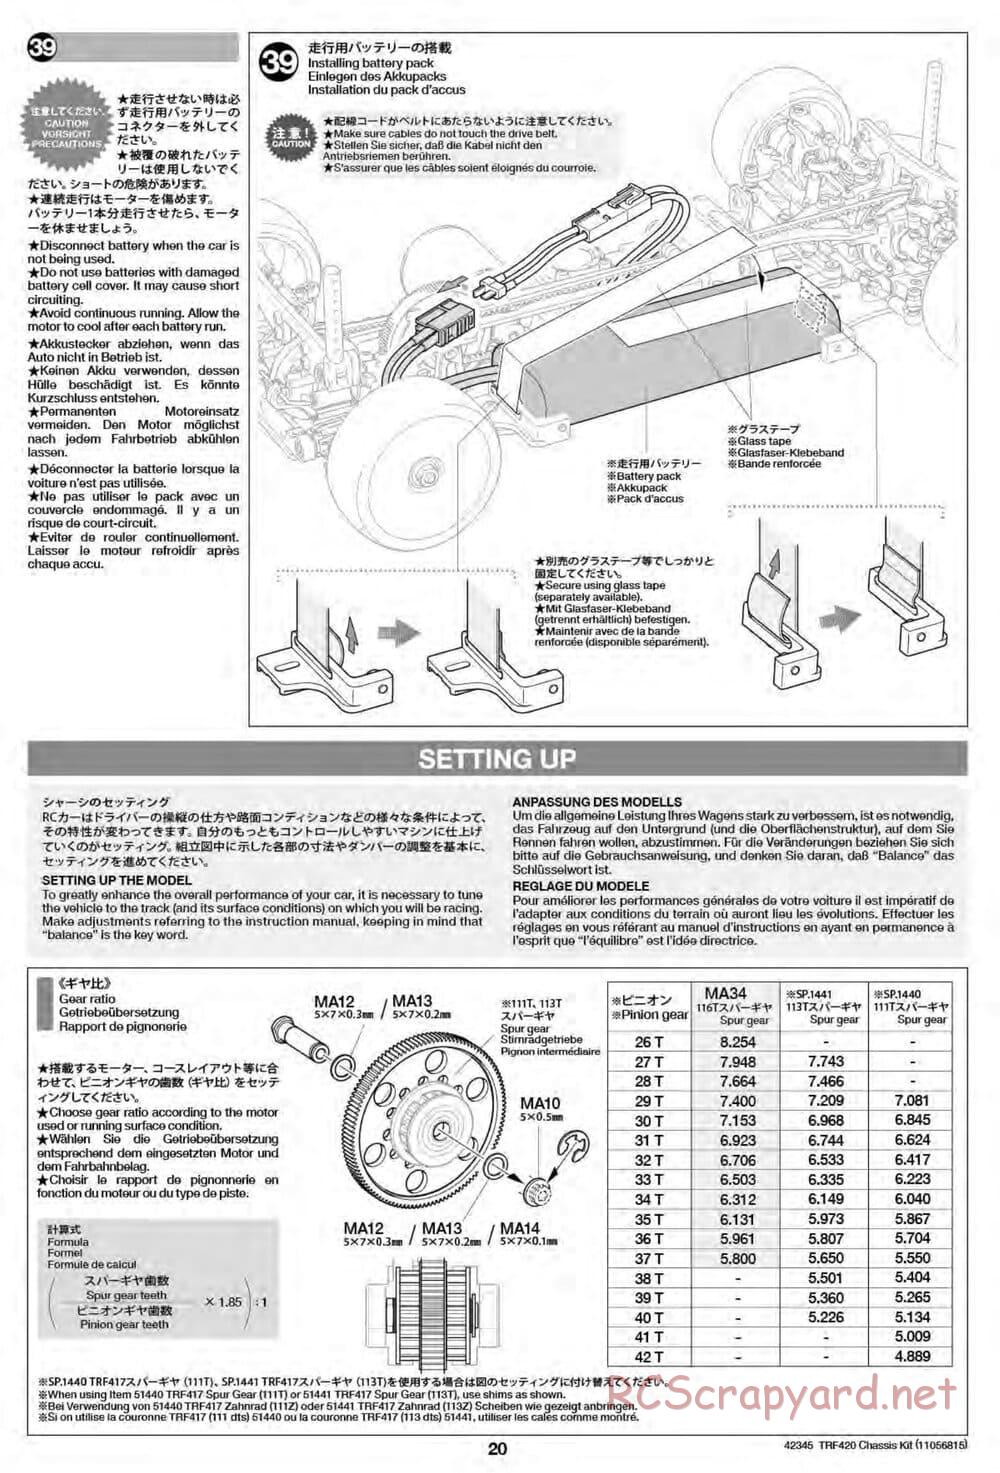 Tamiya - TRF420 Chassis - Manual - Page 20